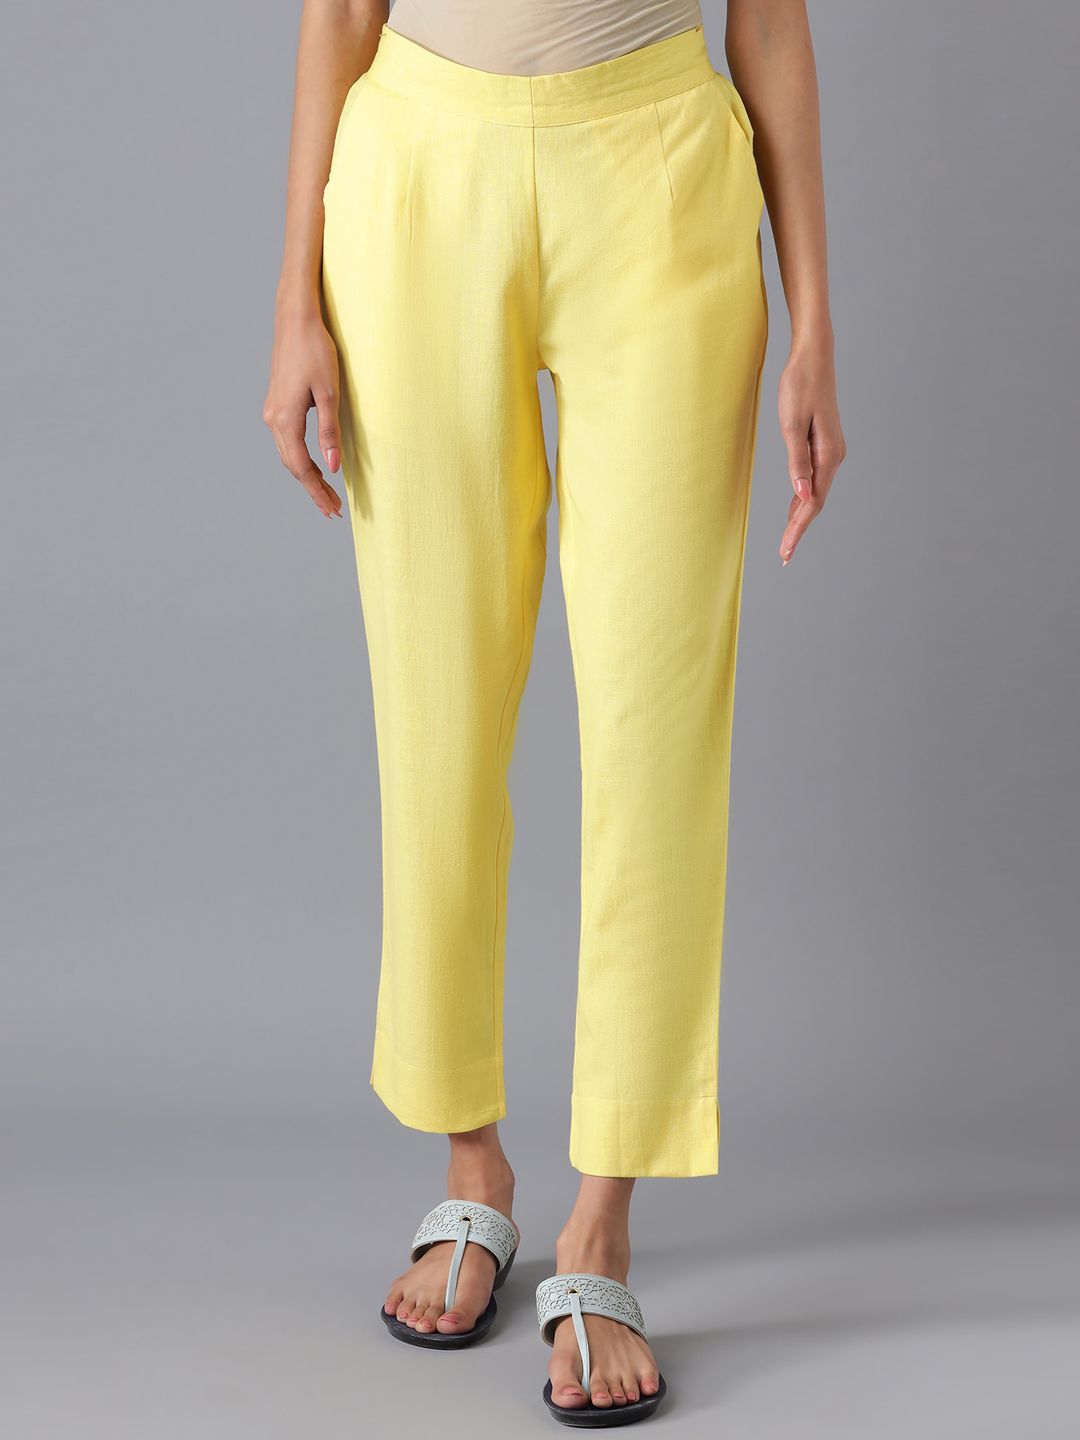 AURELIA Women Yellow Solid Trousers Price in India